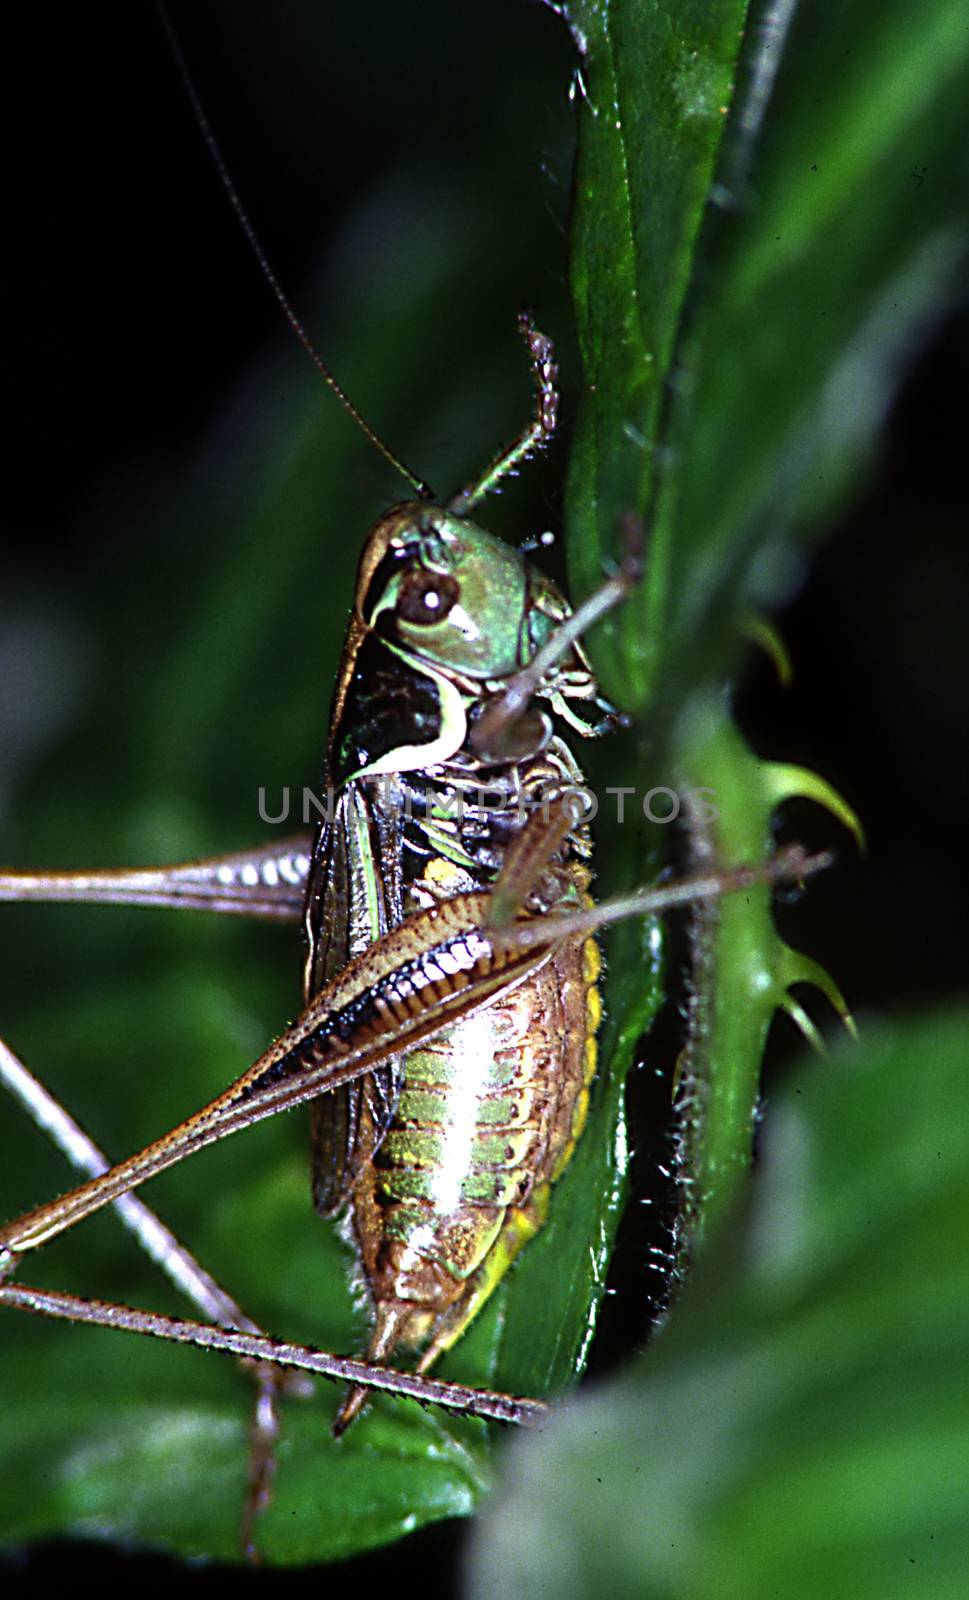 Rösel's grasshopper bite on grass